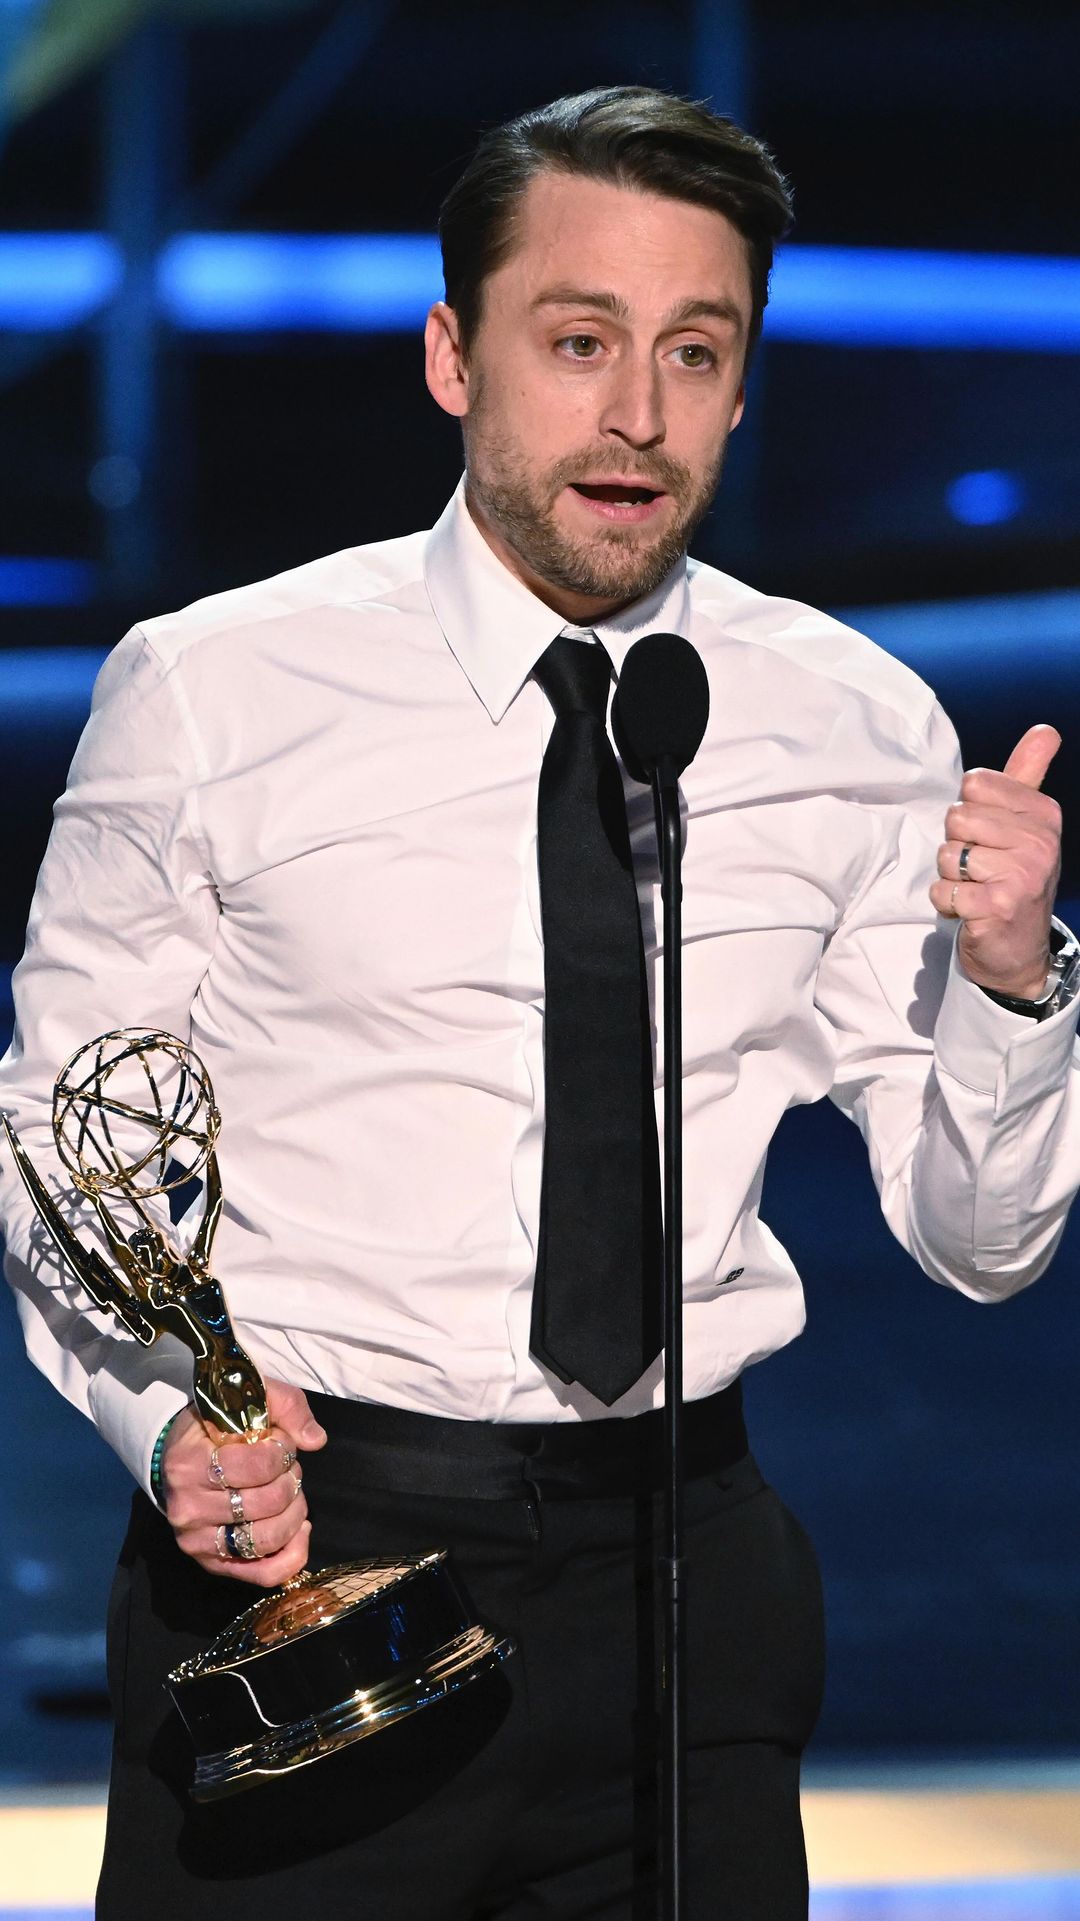 Kieran Culkin won the Emmy for Outstanding Lead Actor in a Drama Series